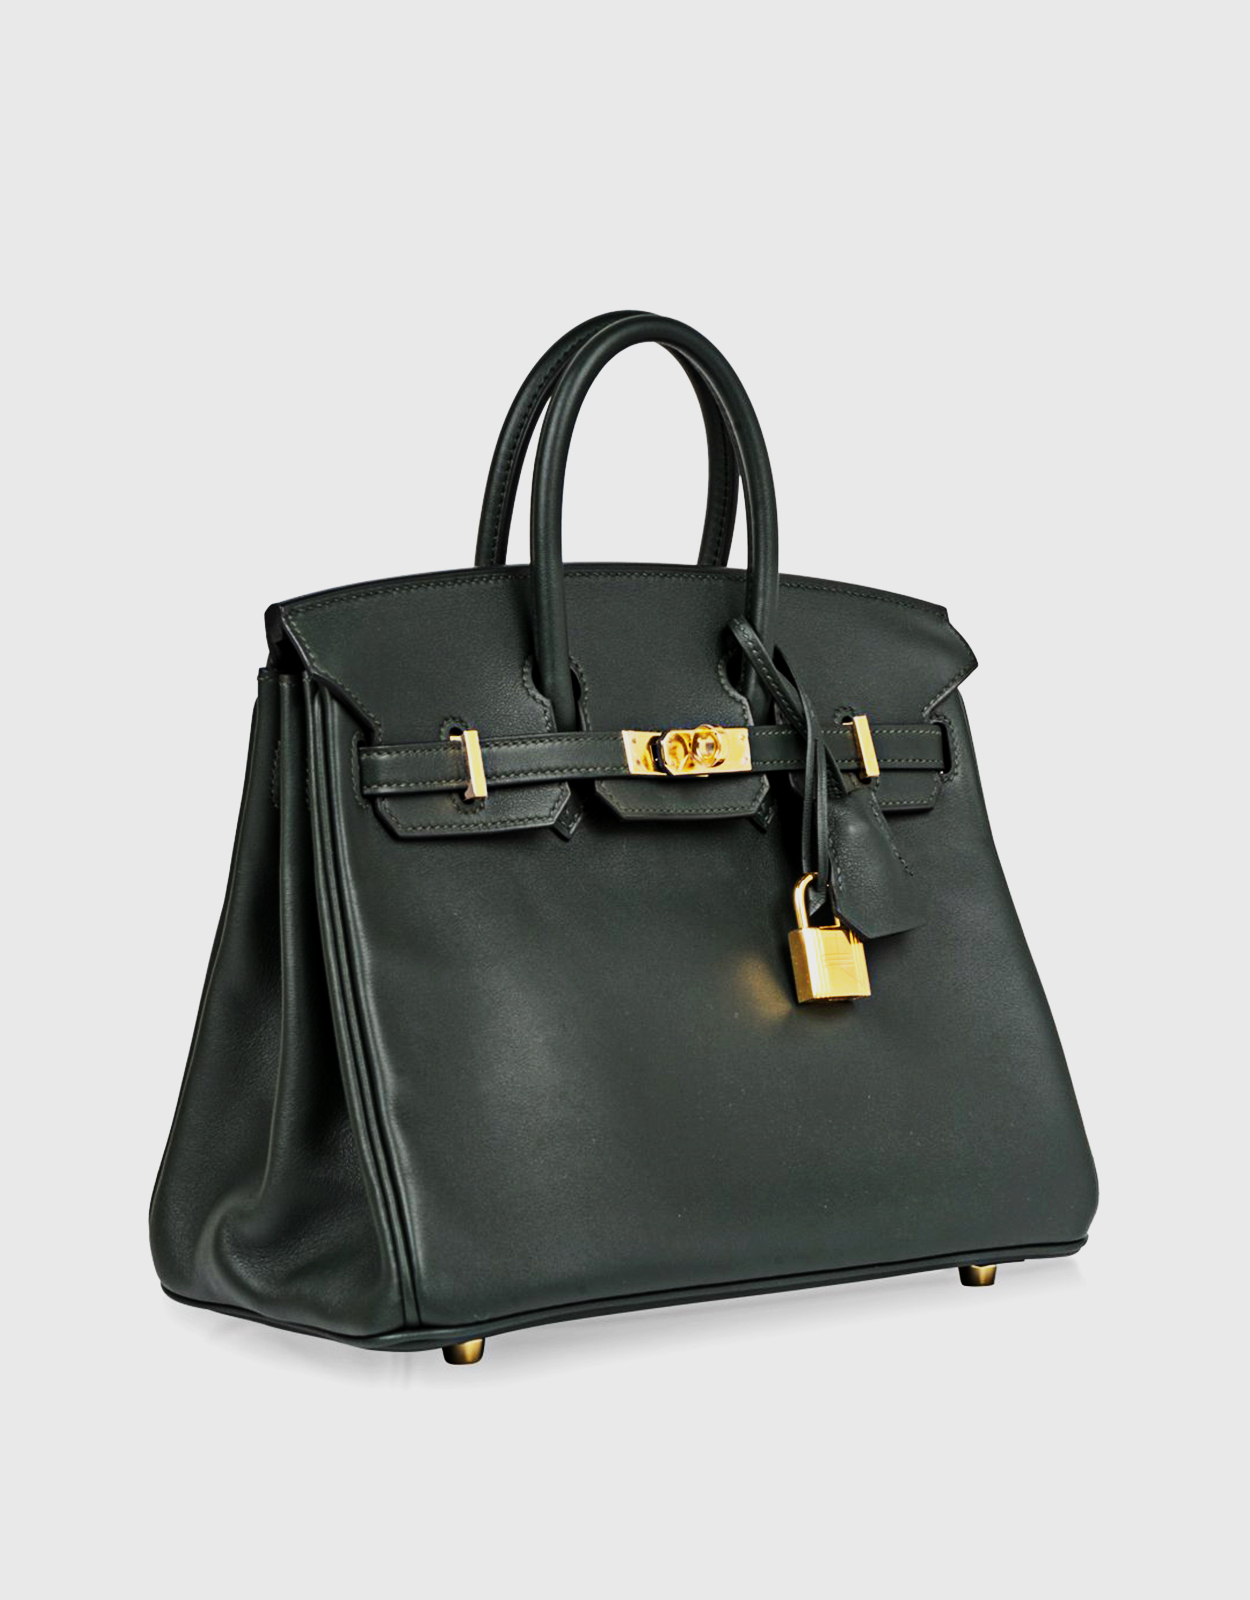 Hermes Vert Anis Swift Leather Birkin 25 Handbag